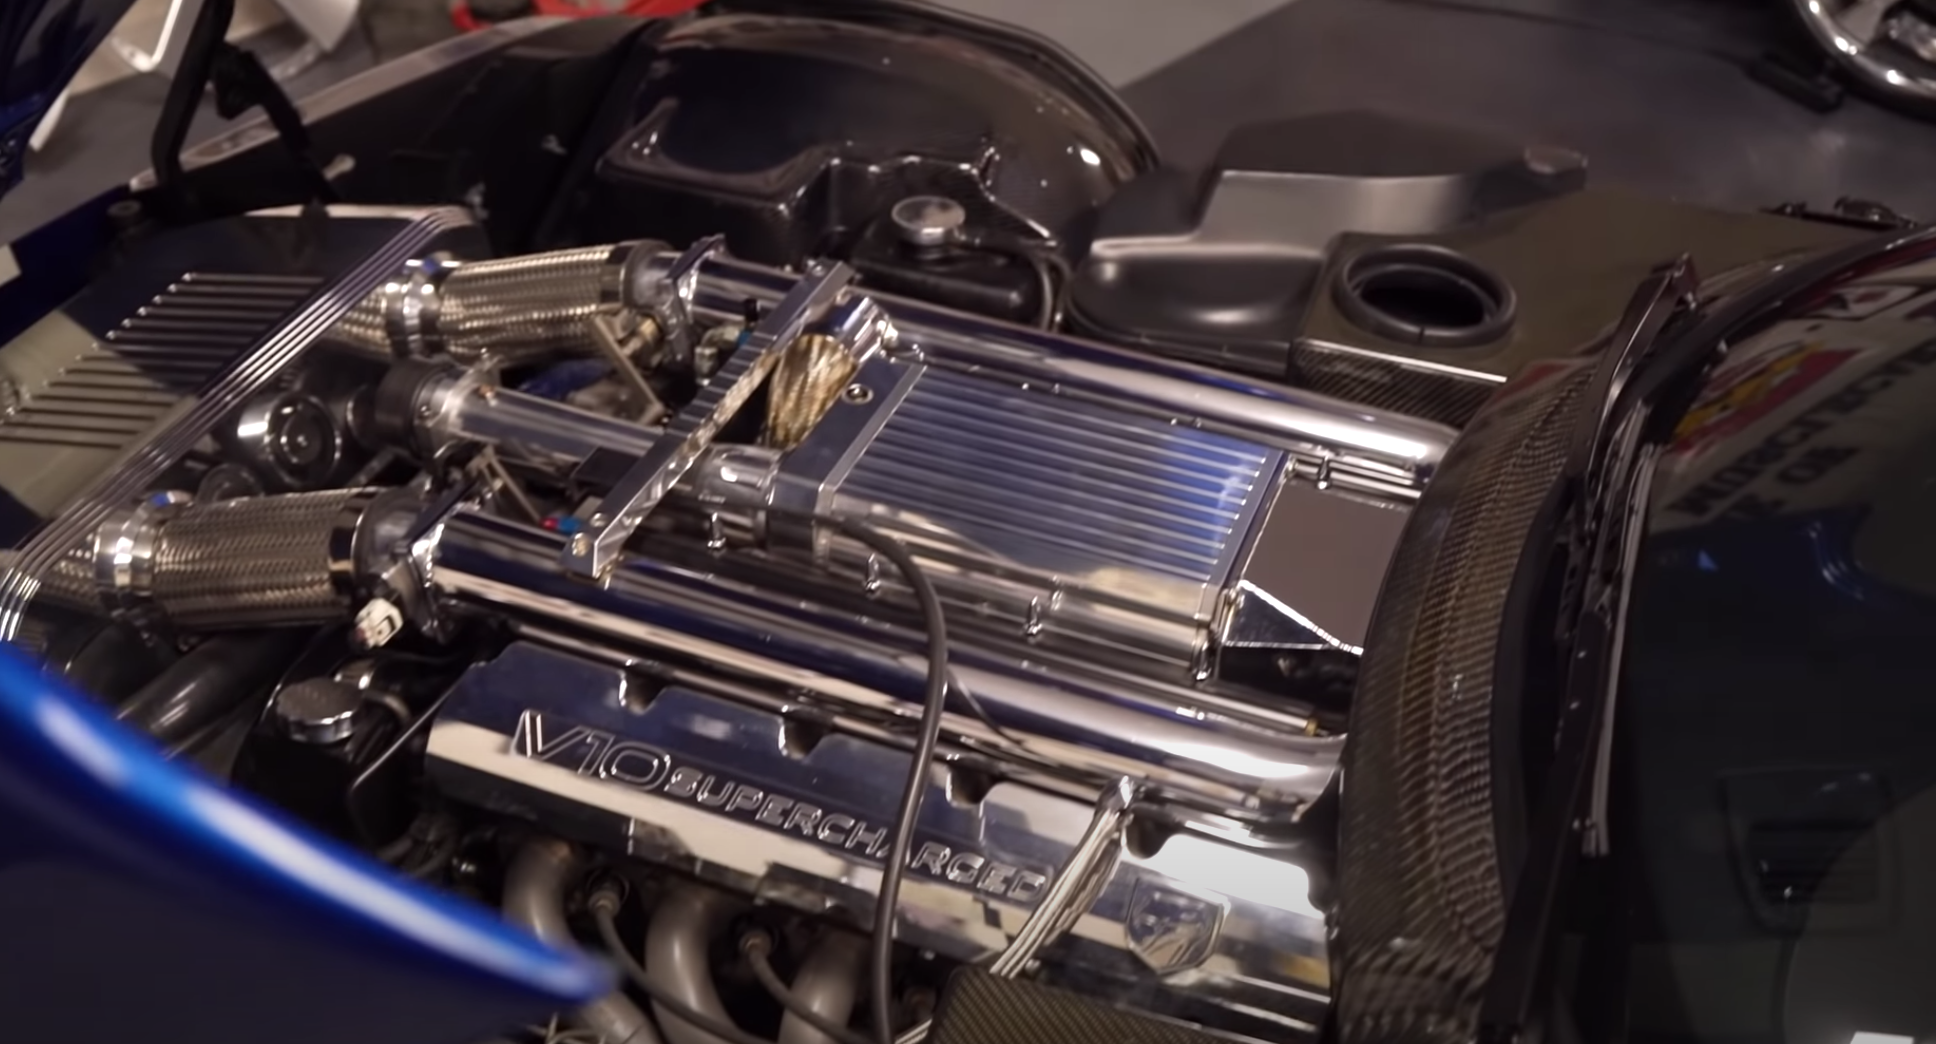 <img src="viper-engine.png" alt="Under the hood of the 1996 Dodge Viper">